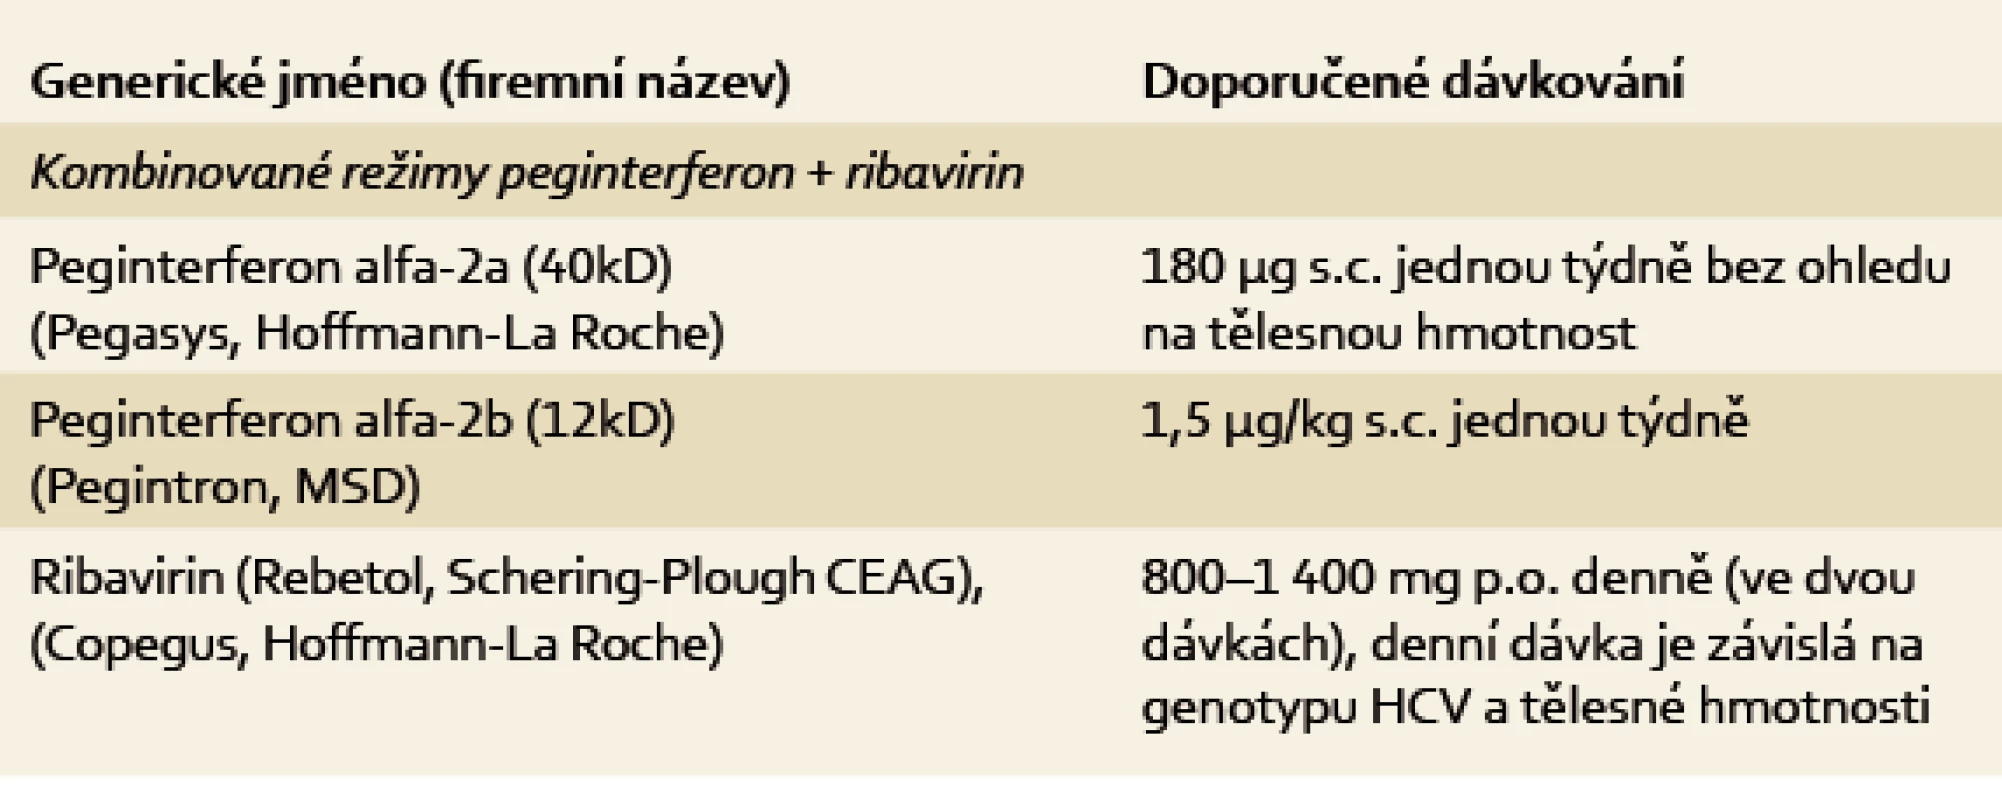 Dávkování pegylovaných interferonů a ribavirinu.
Tab. 2. The dose of pegylated interferon and ribavirin.